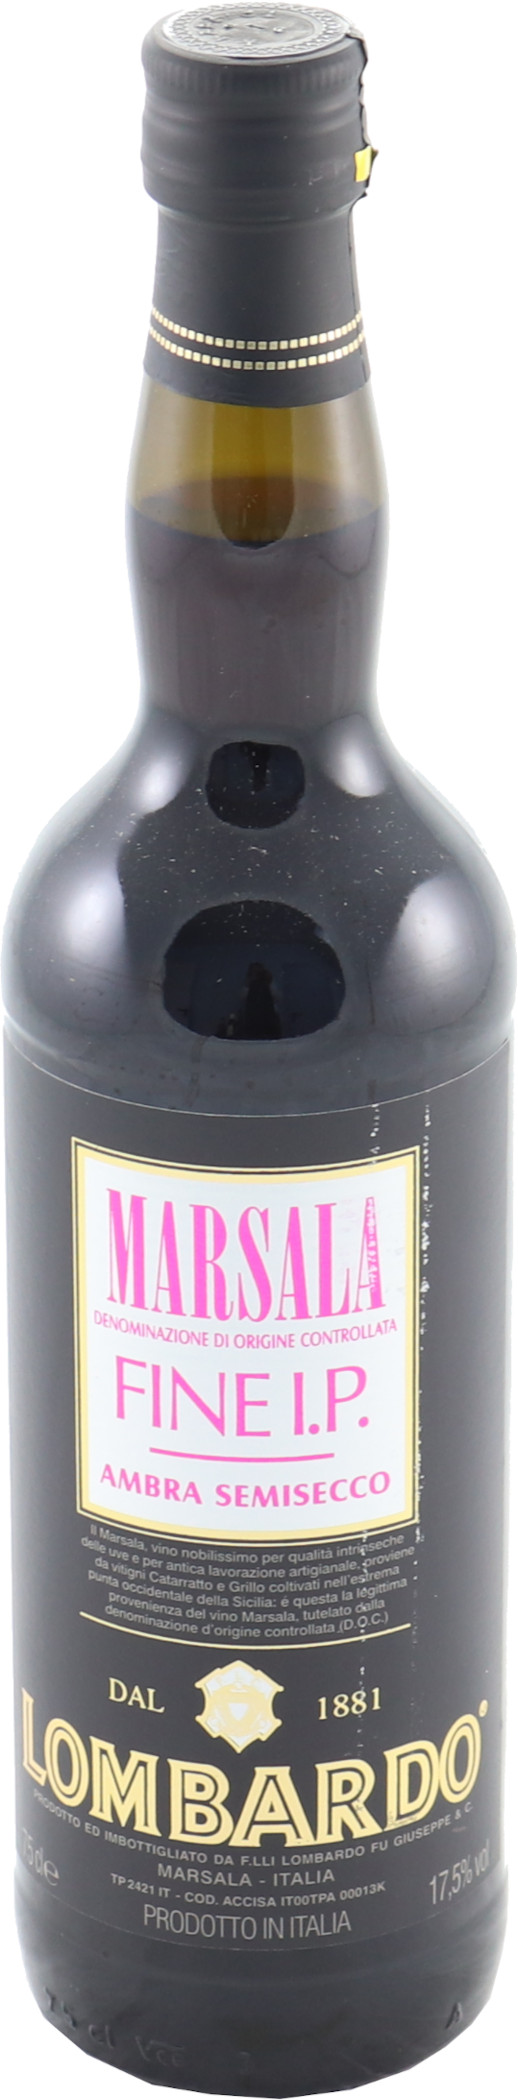 73030 Carlo p. marsala fine wijn 0,75ltr